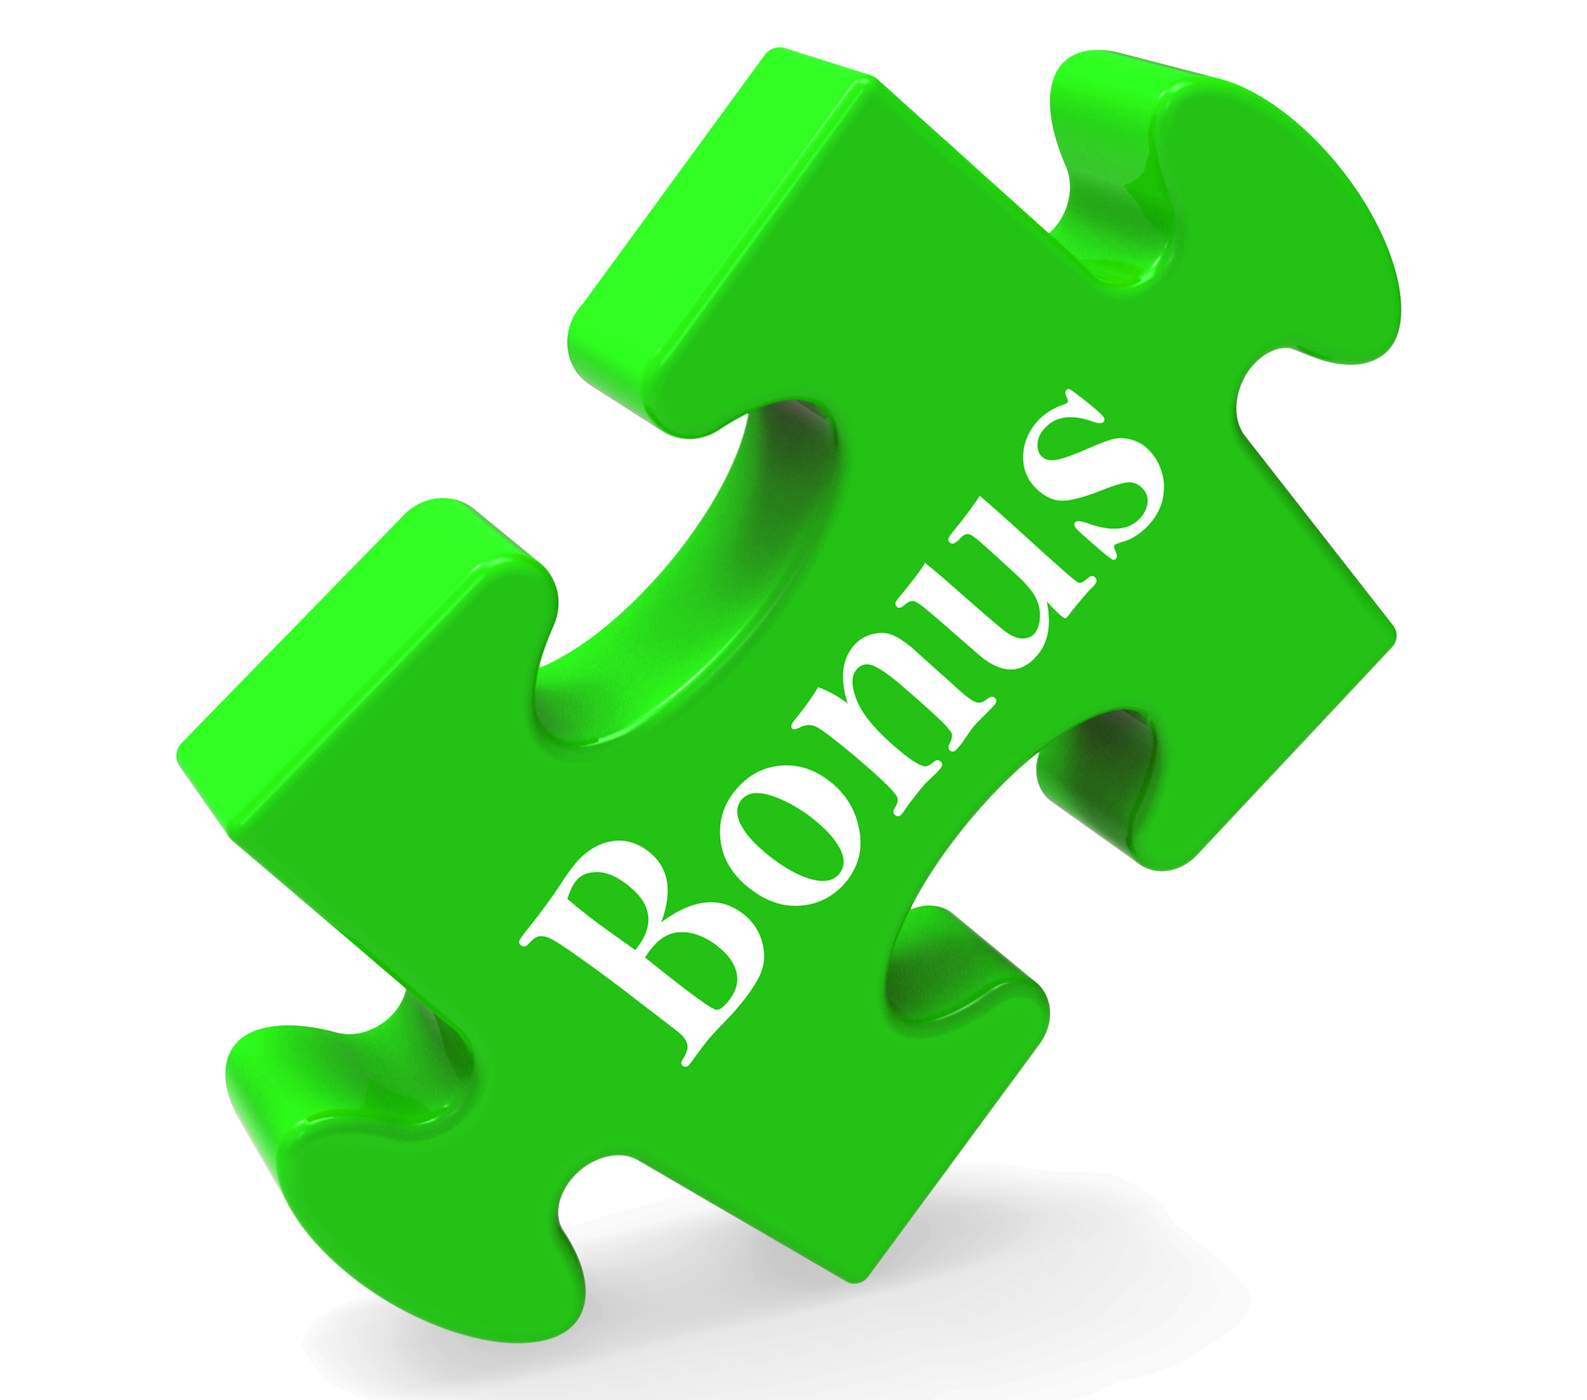 Bonus on puzzle shows reward or perk online photo